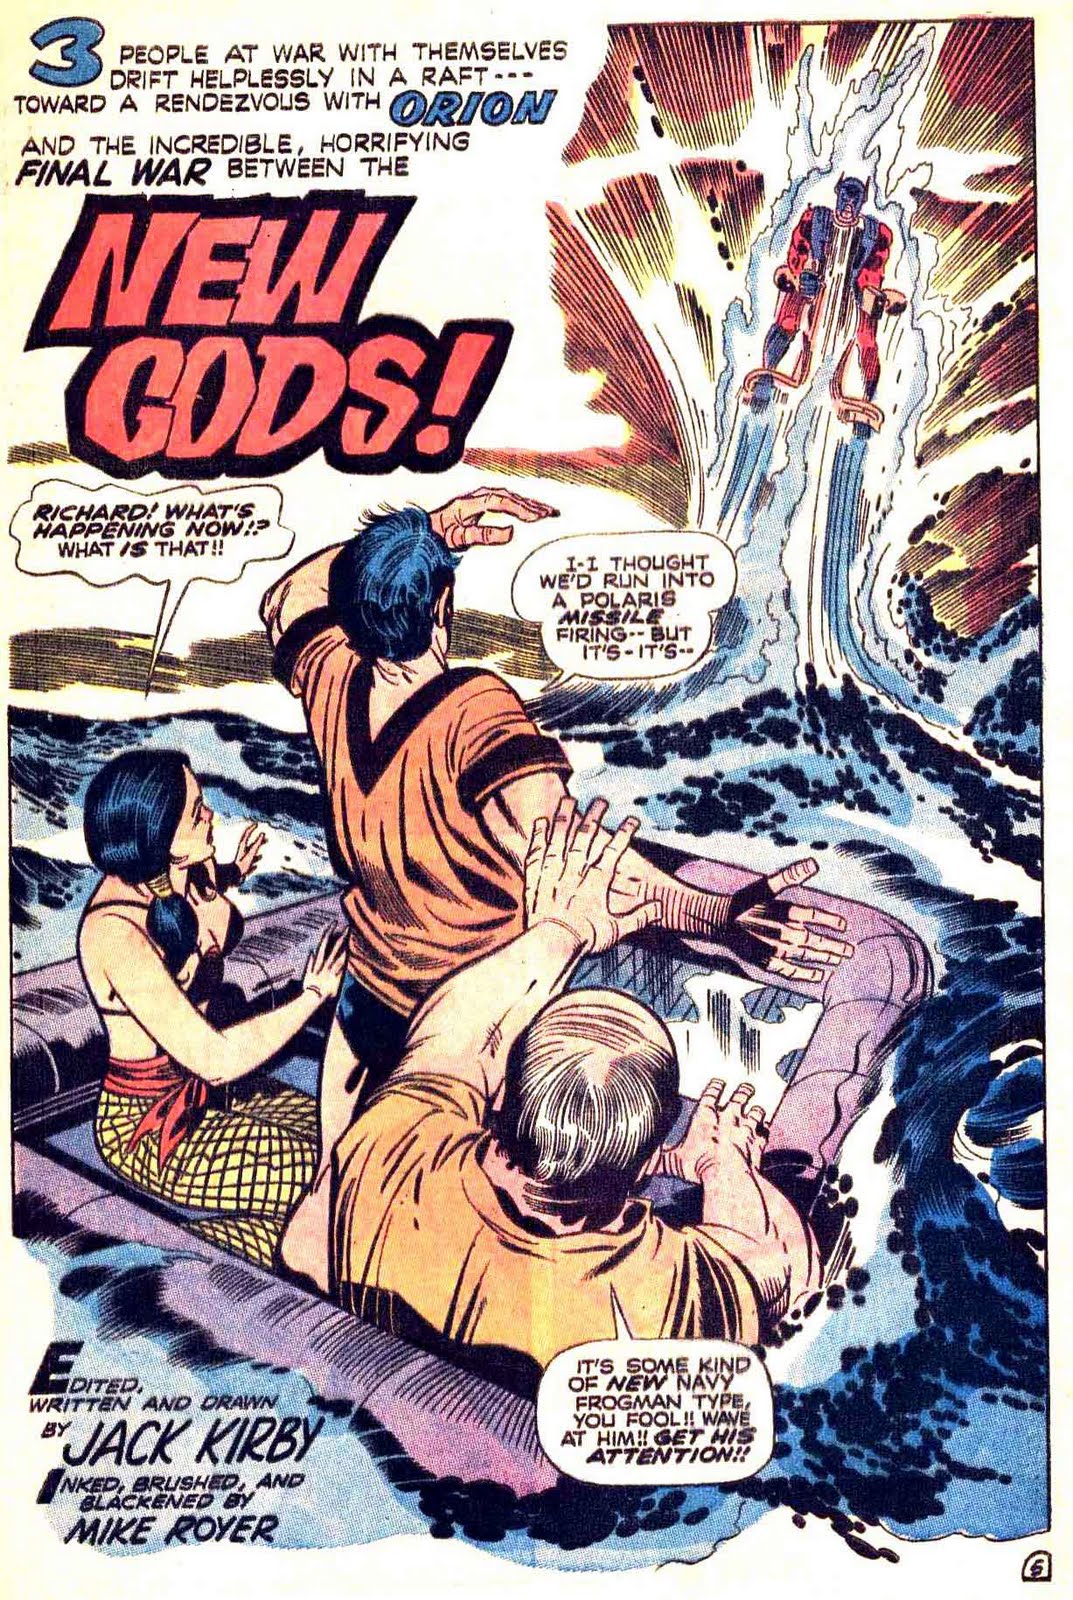 New Gods v1 #6 dc bronze age comic book page art by Jack Kirby